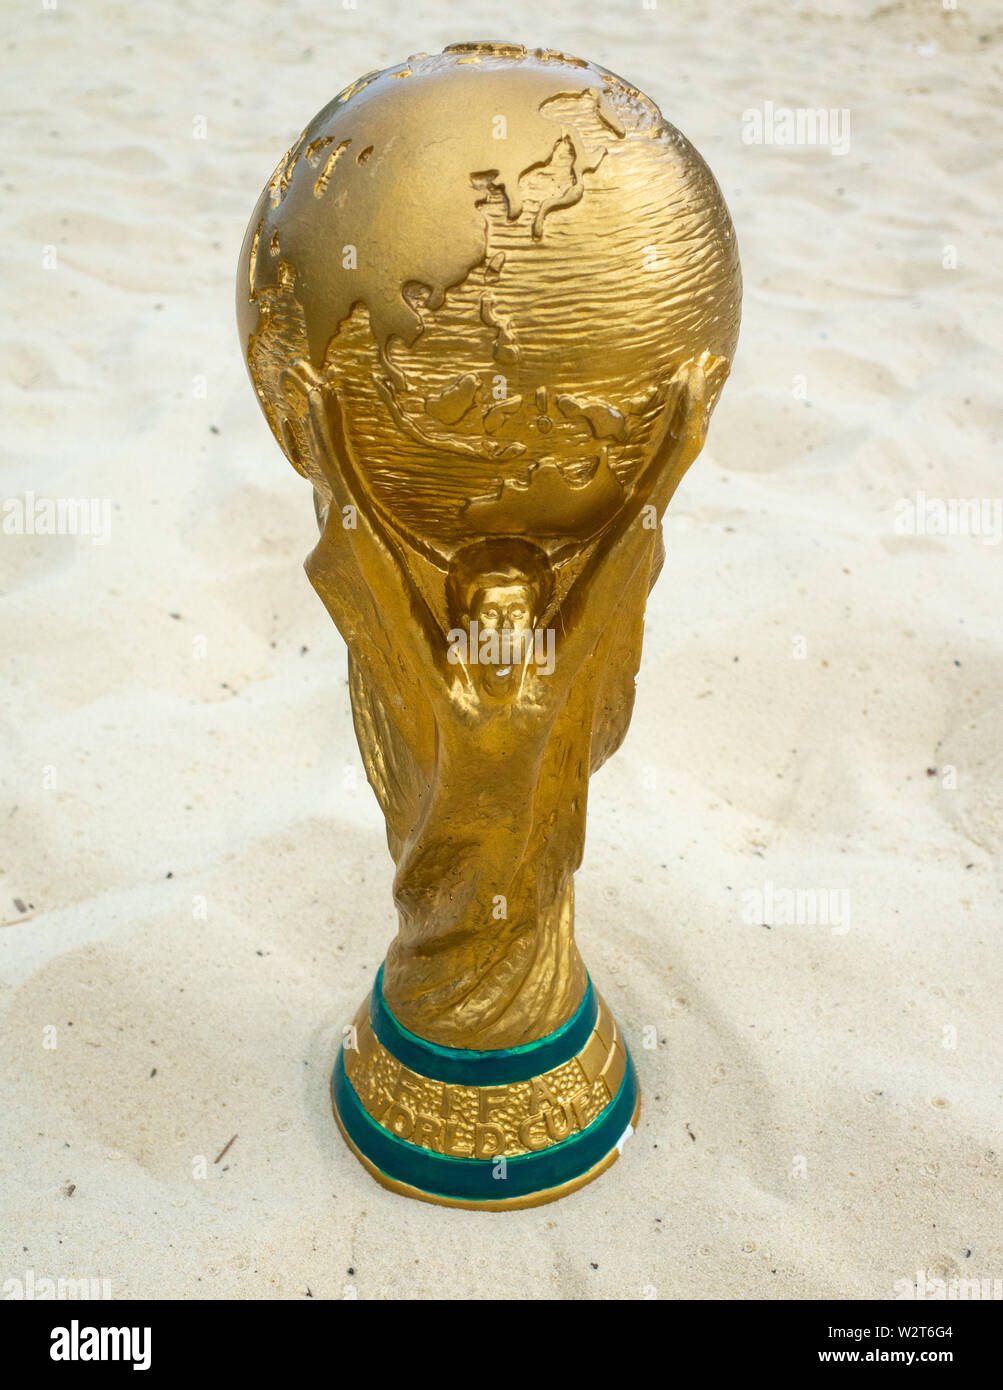 May 30, 2019. Doha, Qatar. FIFA World Cup trophy on sand. FIFA World Cup  2022  will be held in Qatar. Stock Photo